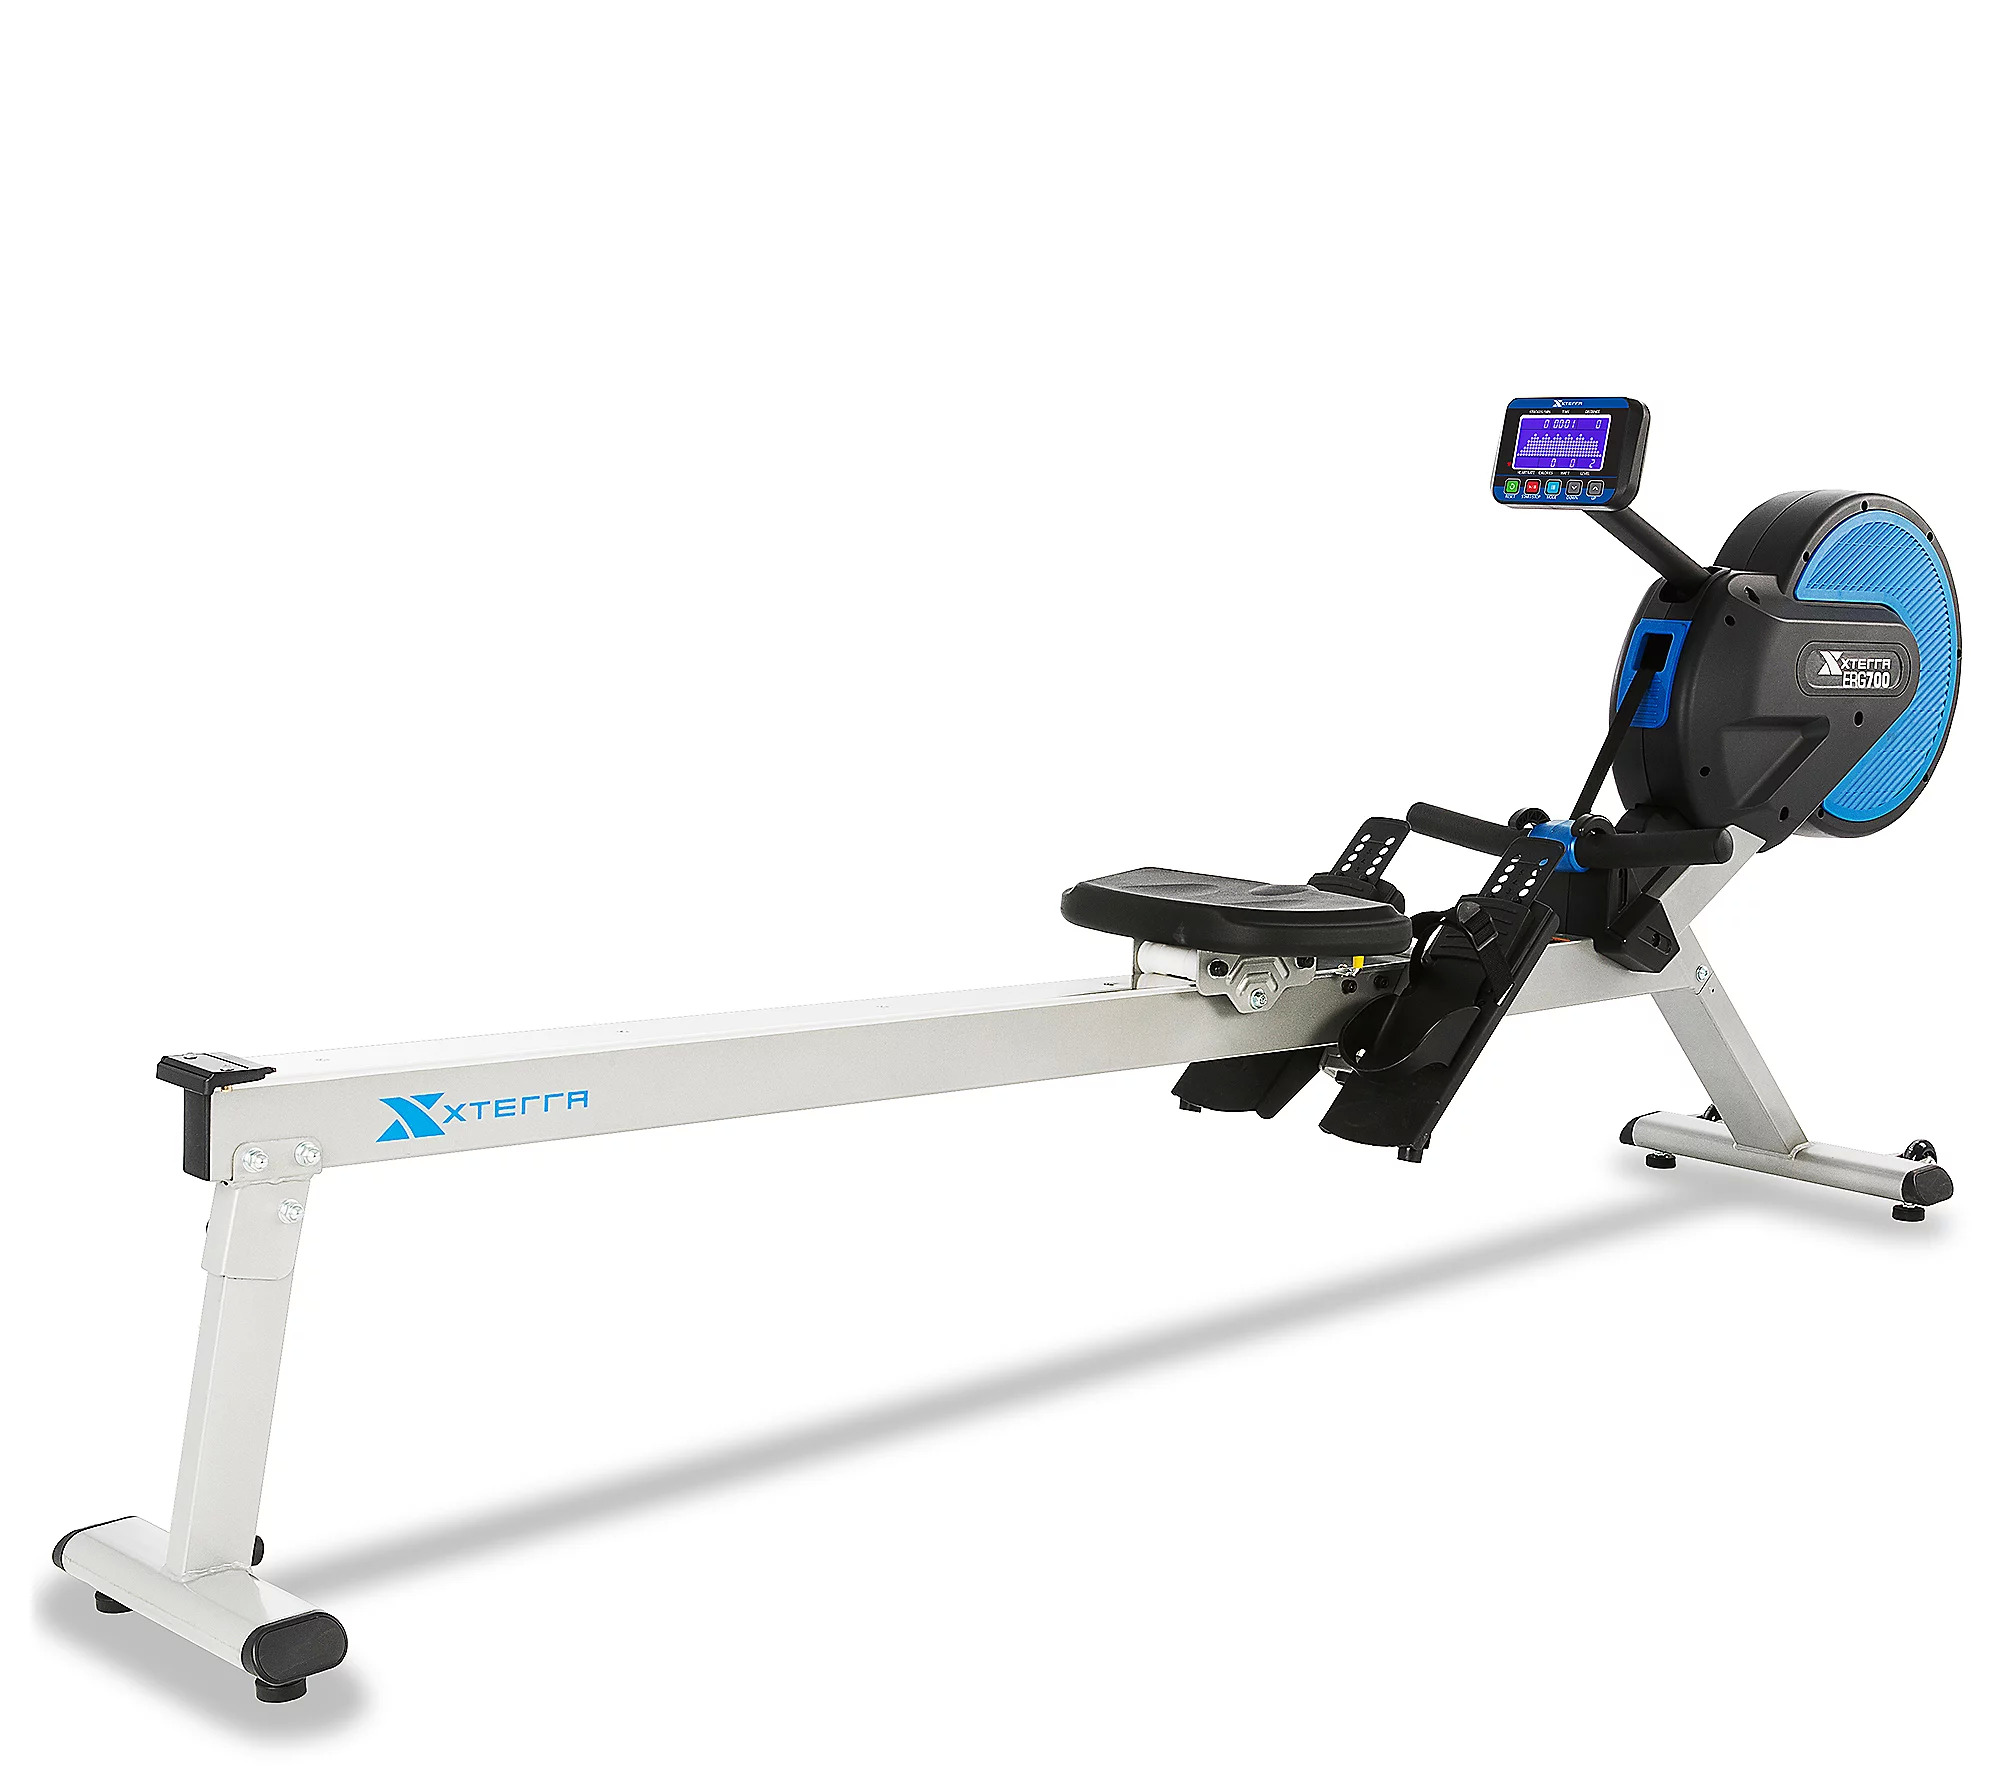 Xterra ERG700 rower/rowing machine $350 before new customer codes + Free Shipping